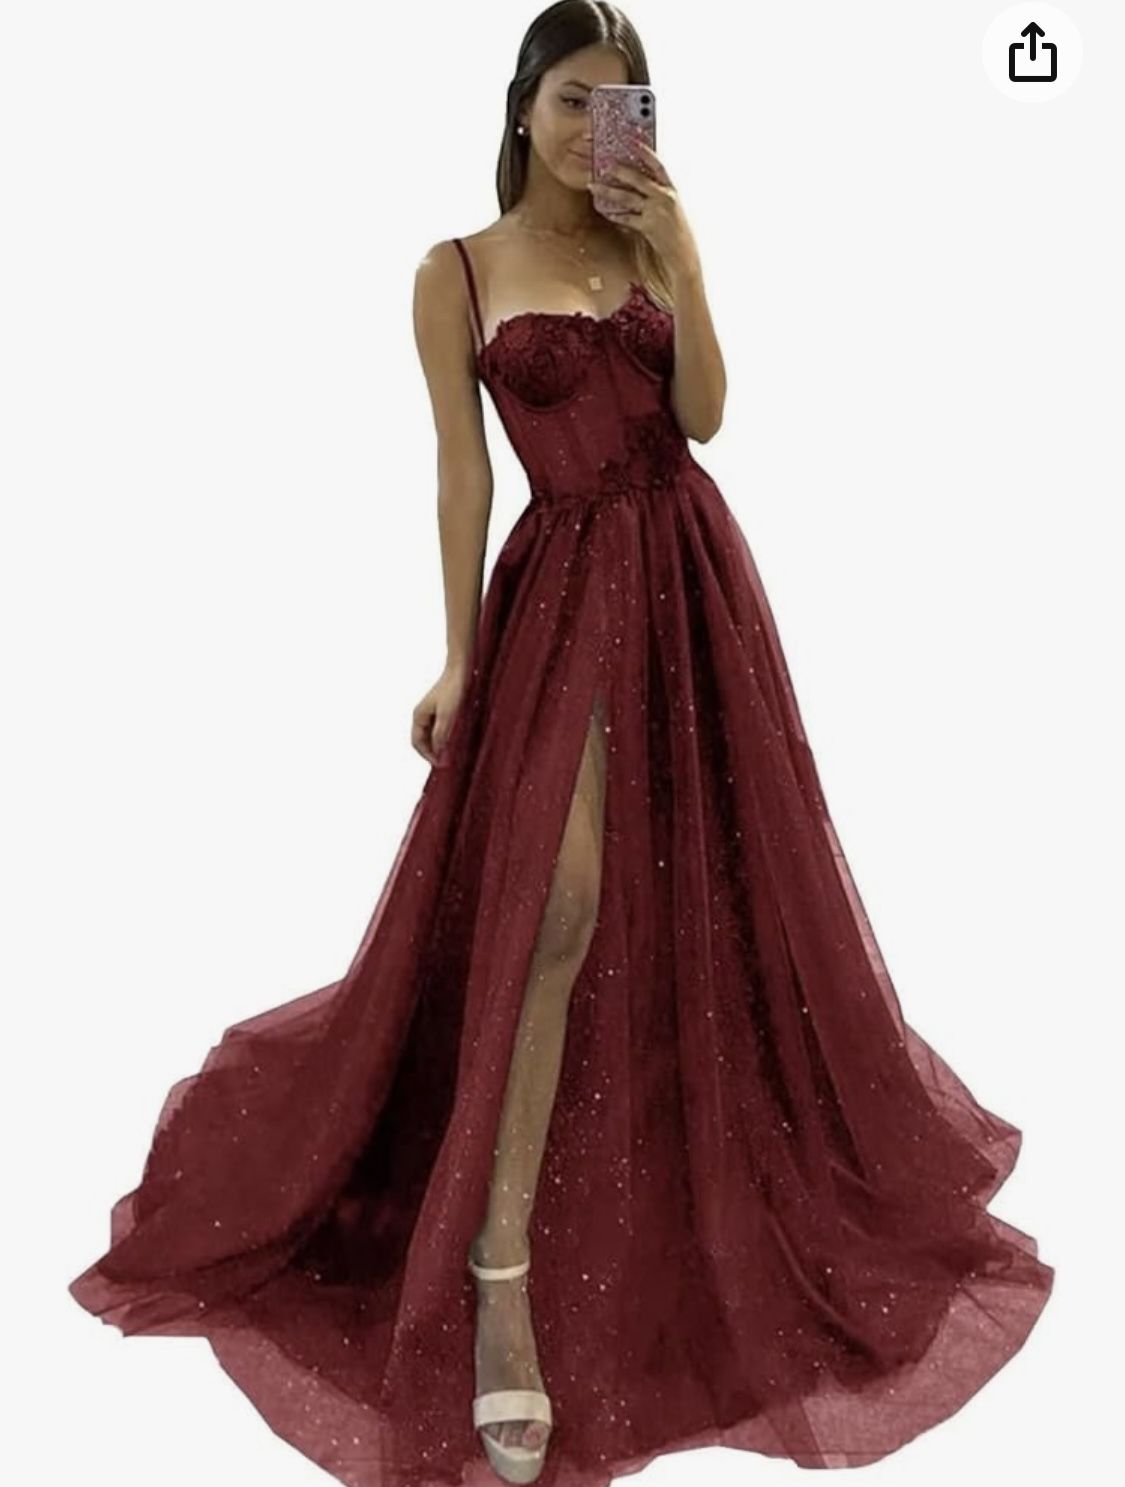 Women’s Glitter Tulle Red Prom Dress Size 10